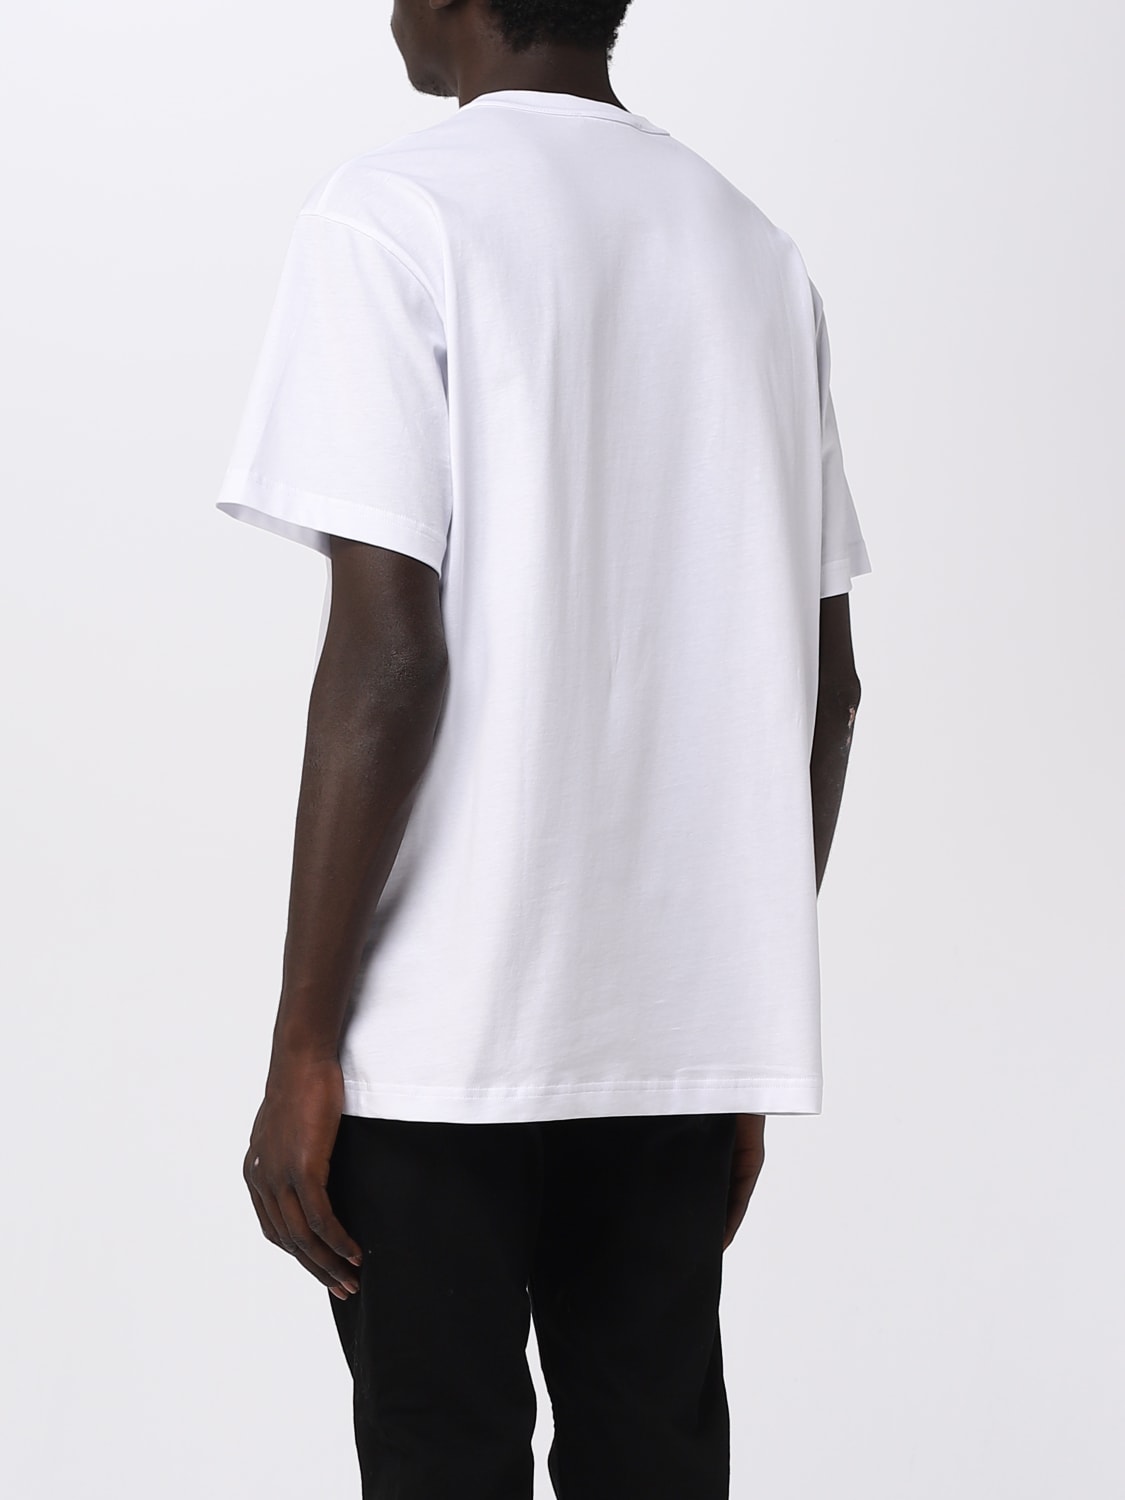 VERSACE JEANS COUTURE: cotton t-shirt - White | VERSACE JEANS COUTURE t ...